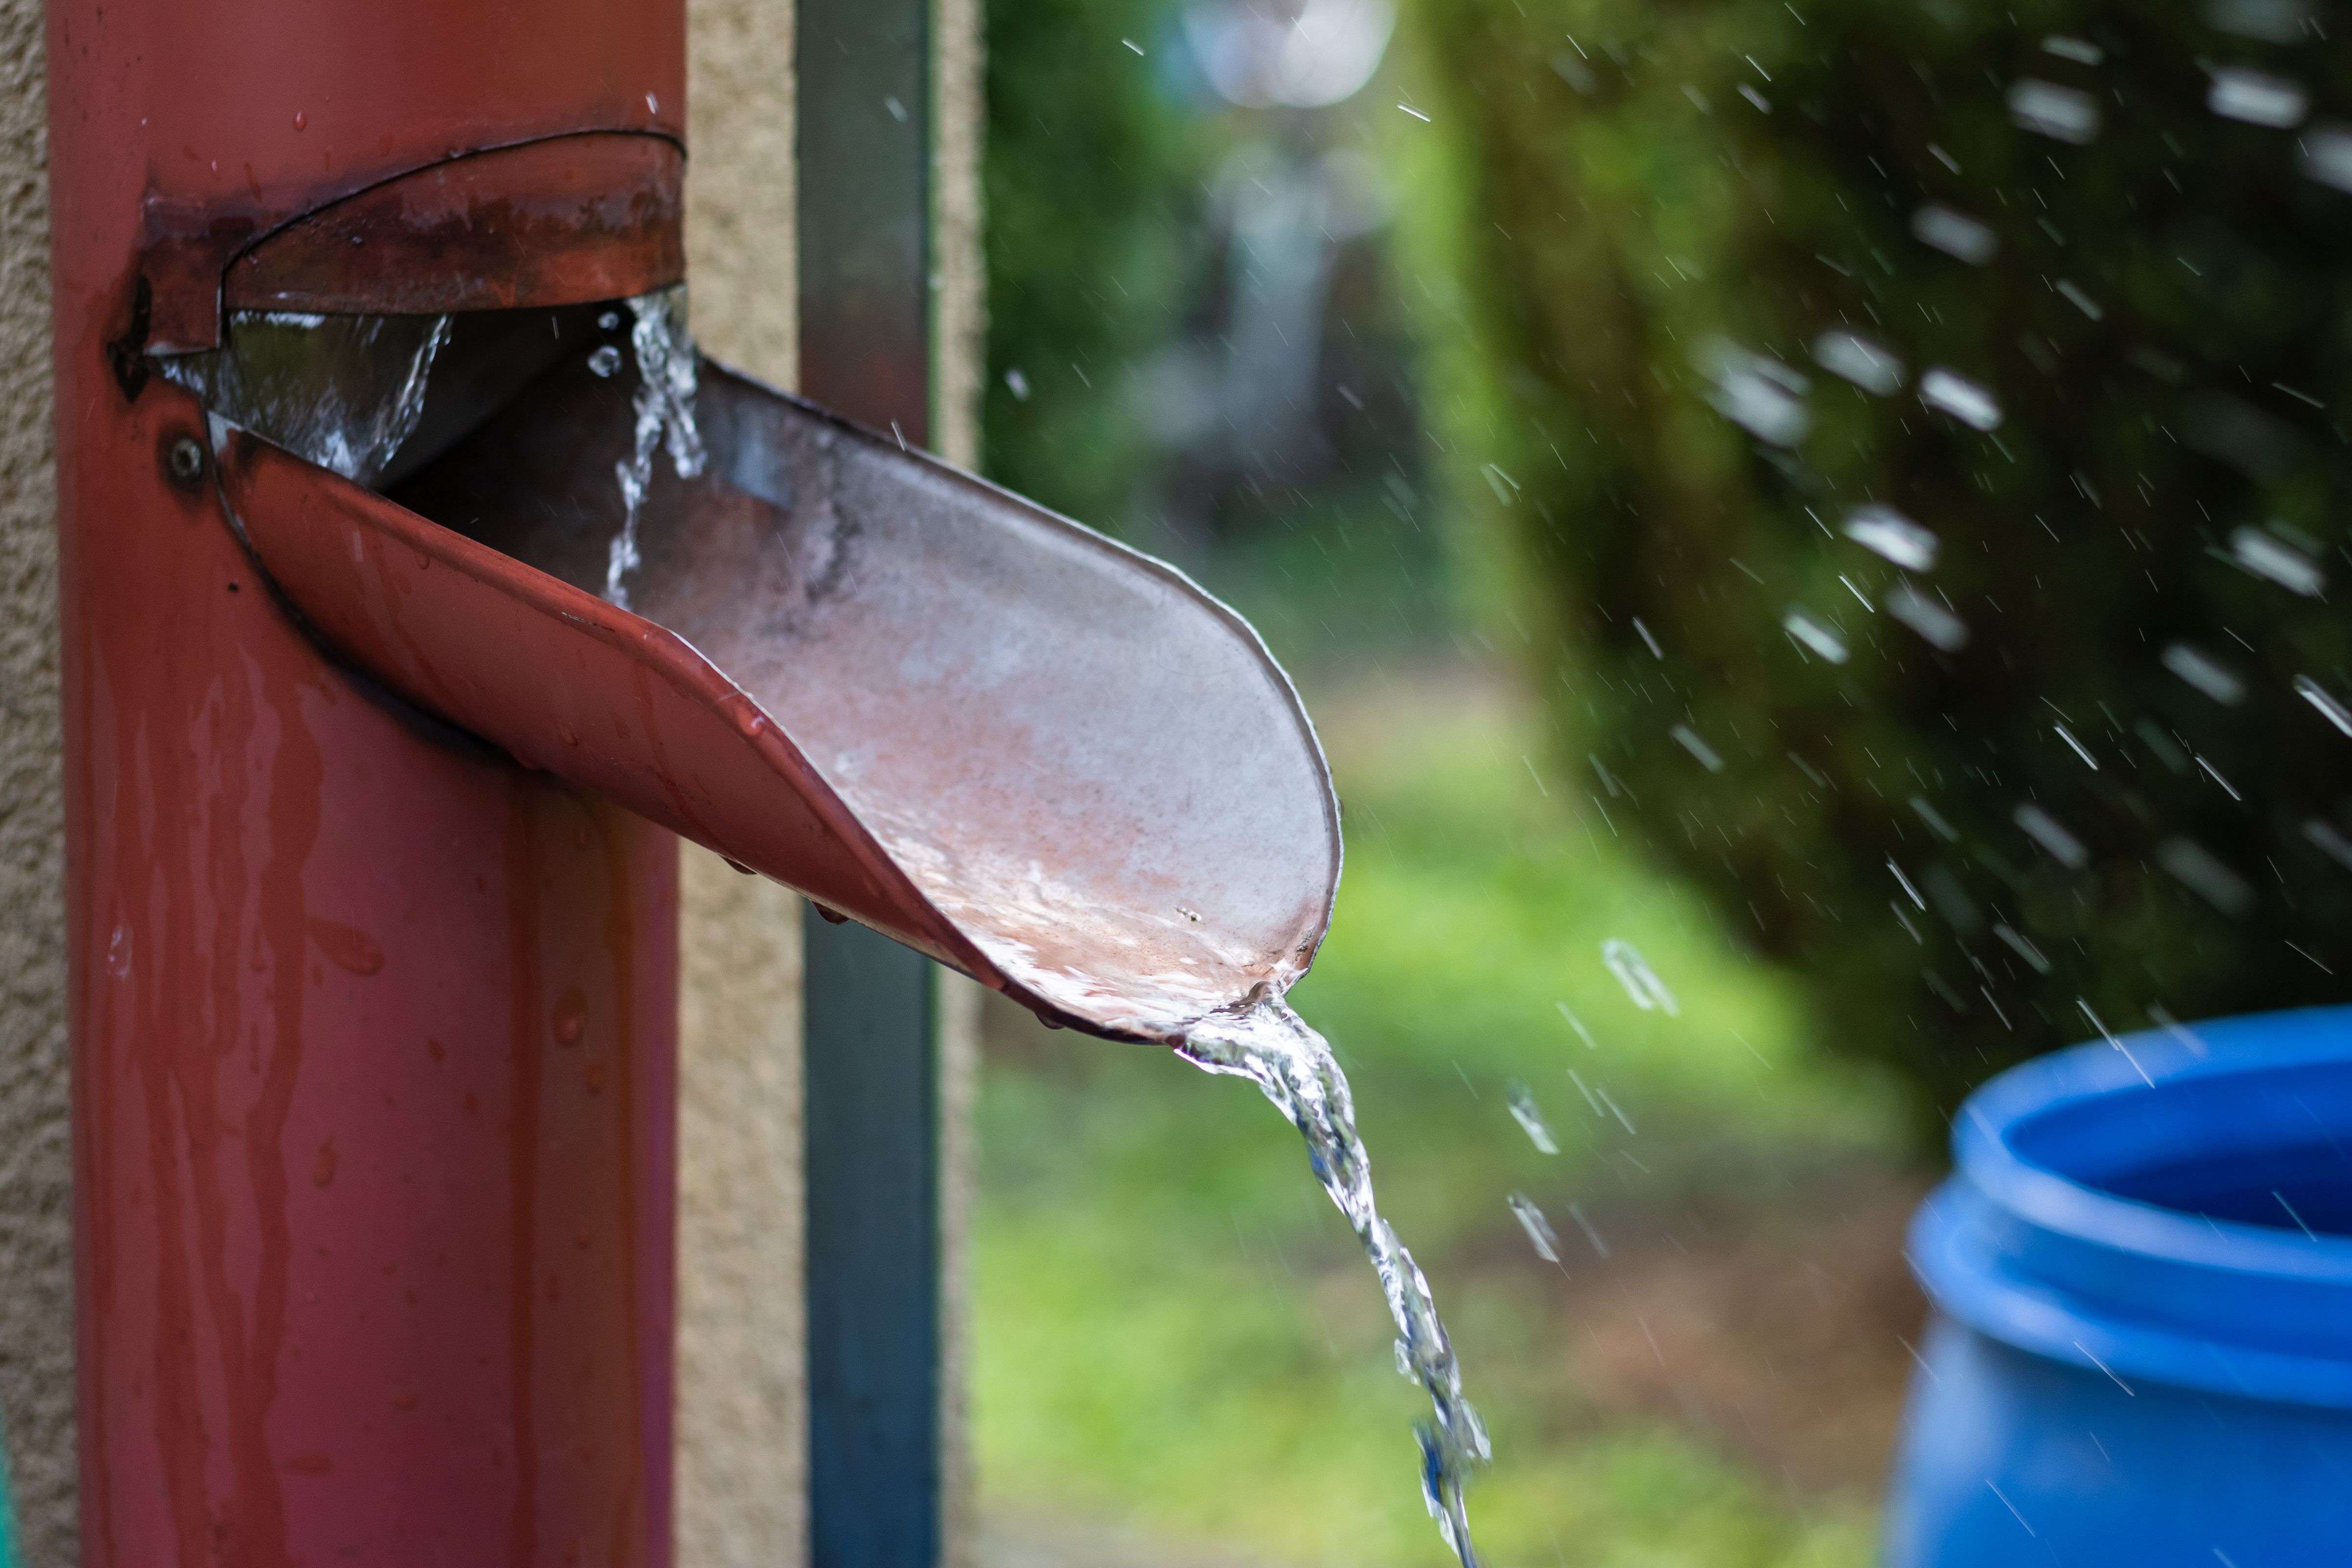 How to harvest rainwater